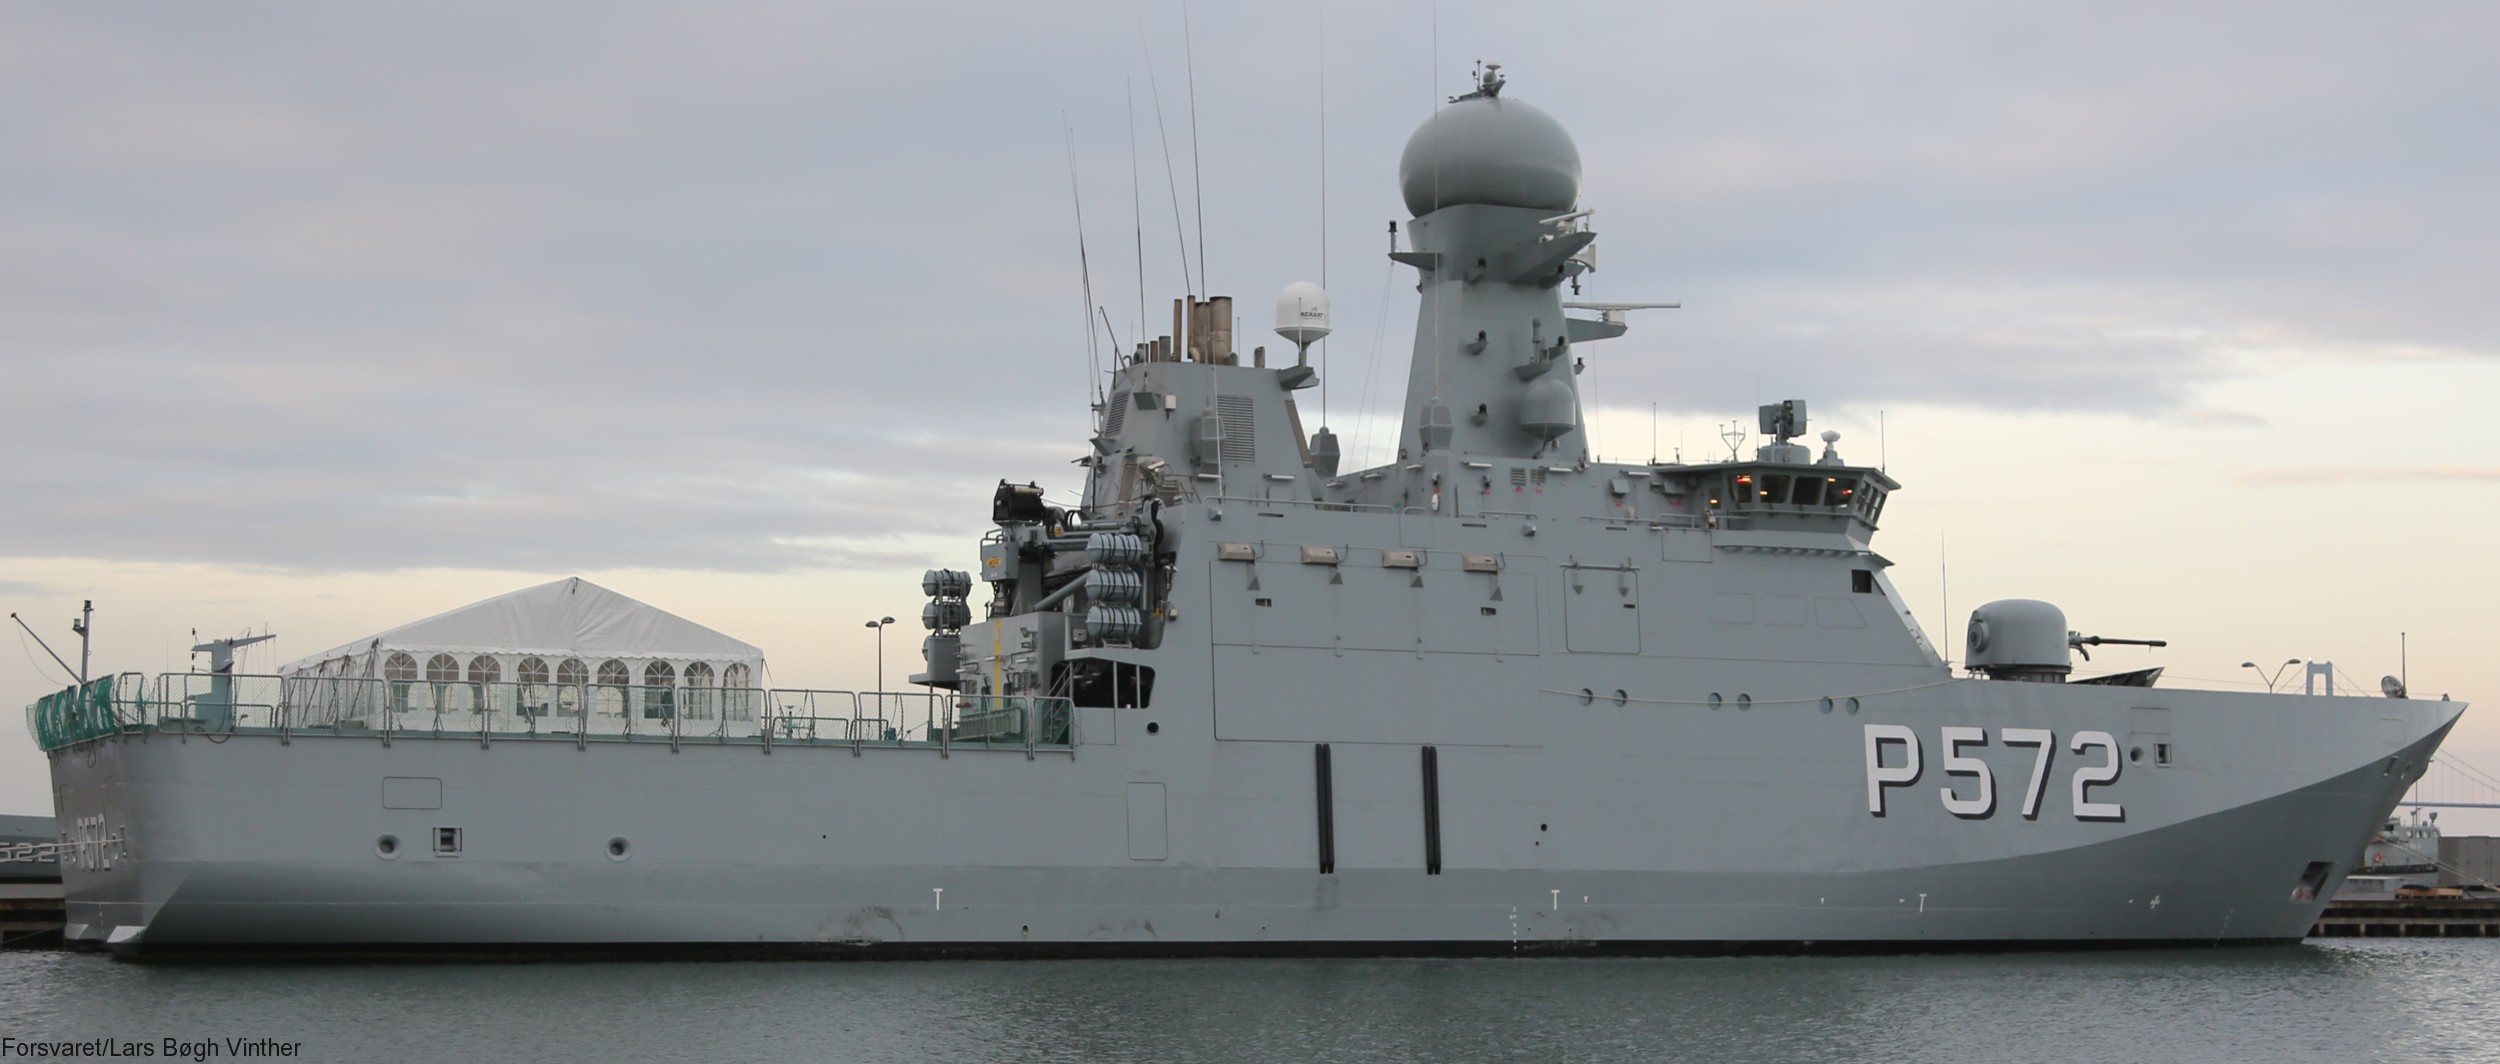 p-572 hdms lauge koch knud rasmussen class offshore patrol vessel royal danish navy inspektionsfartøj 06